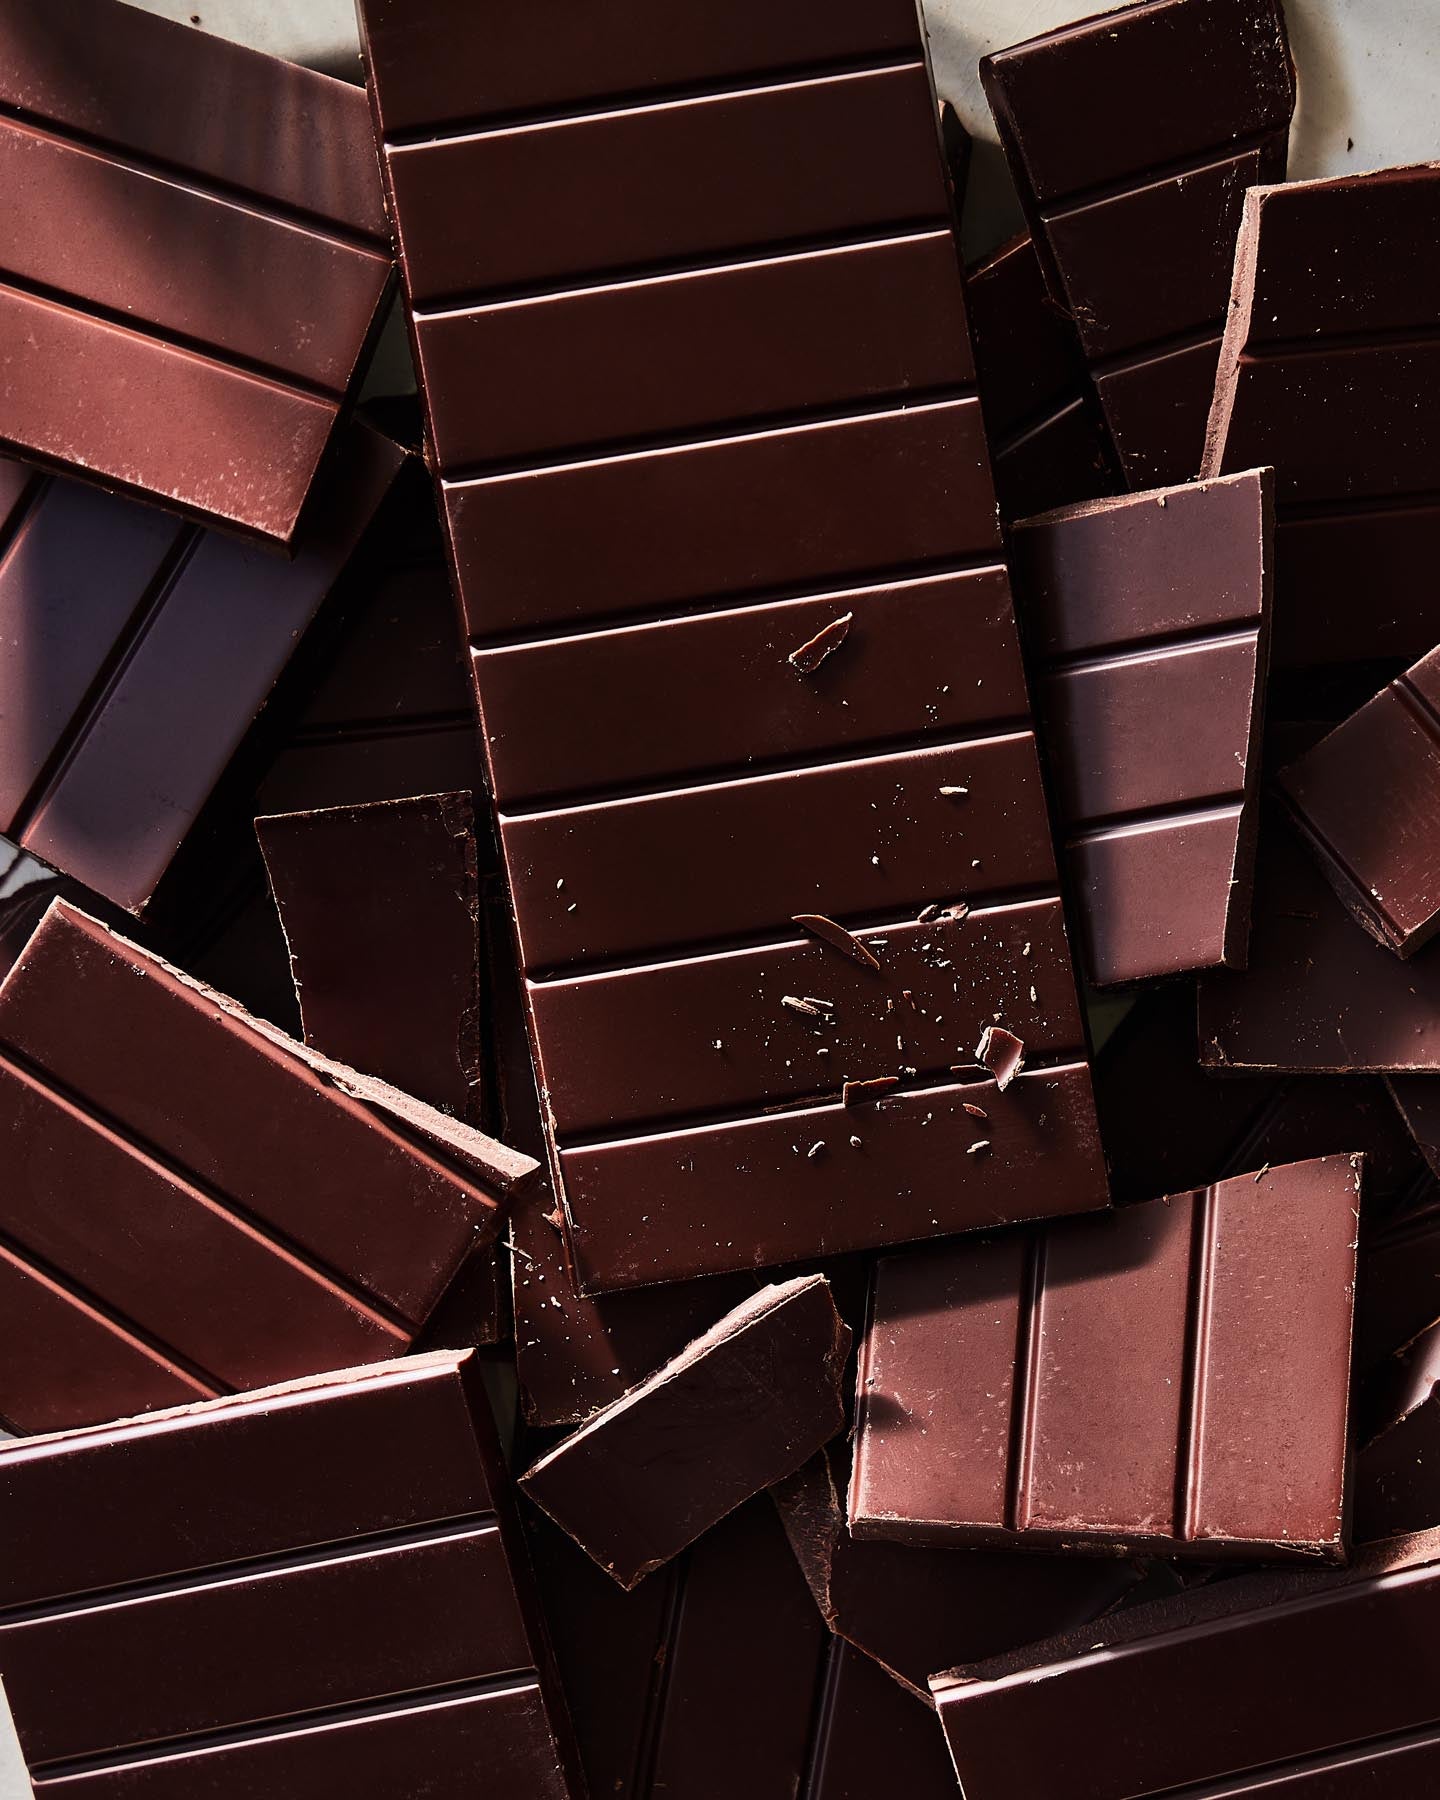 Organic Dark Chocolate 70% Cacao